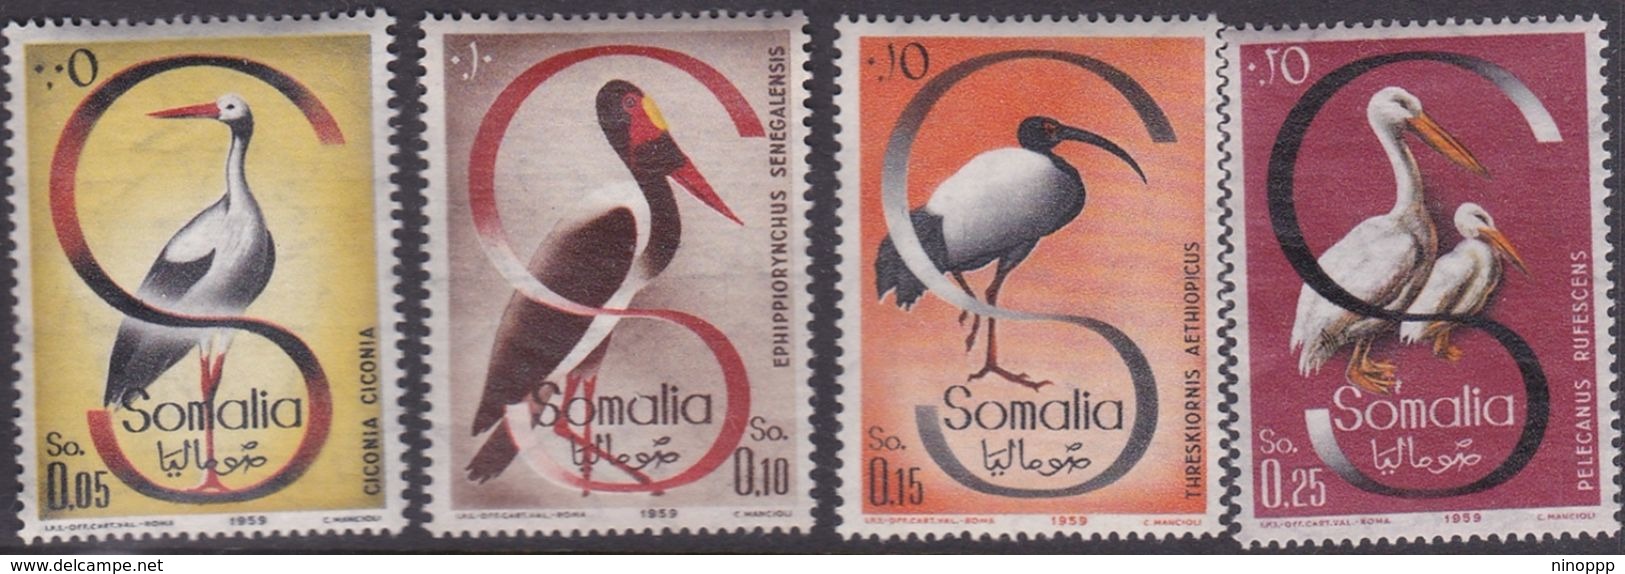 Somalia Scott 230-233 1959 Birds, Mint Never Hinged - Somalië (AFIS)